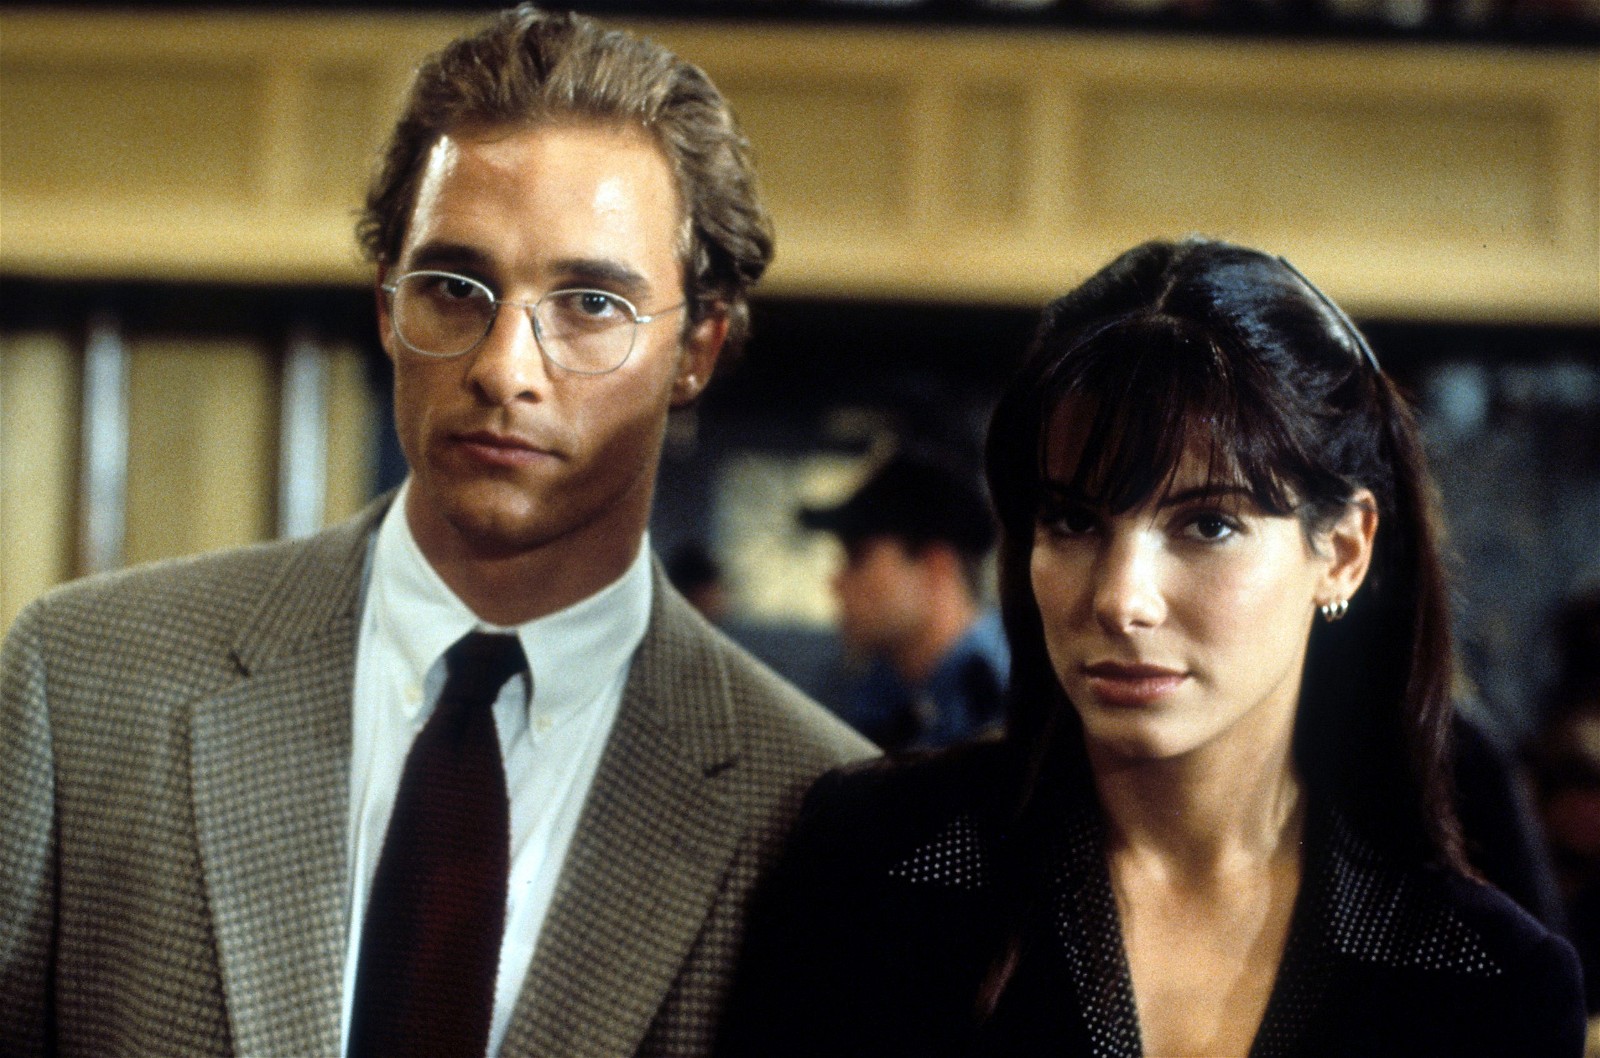 Matthew McConaughey and Sandra Bullock in A Time to Kill (1996)